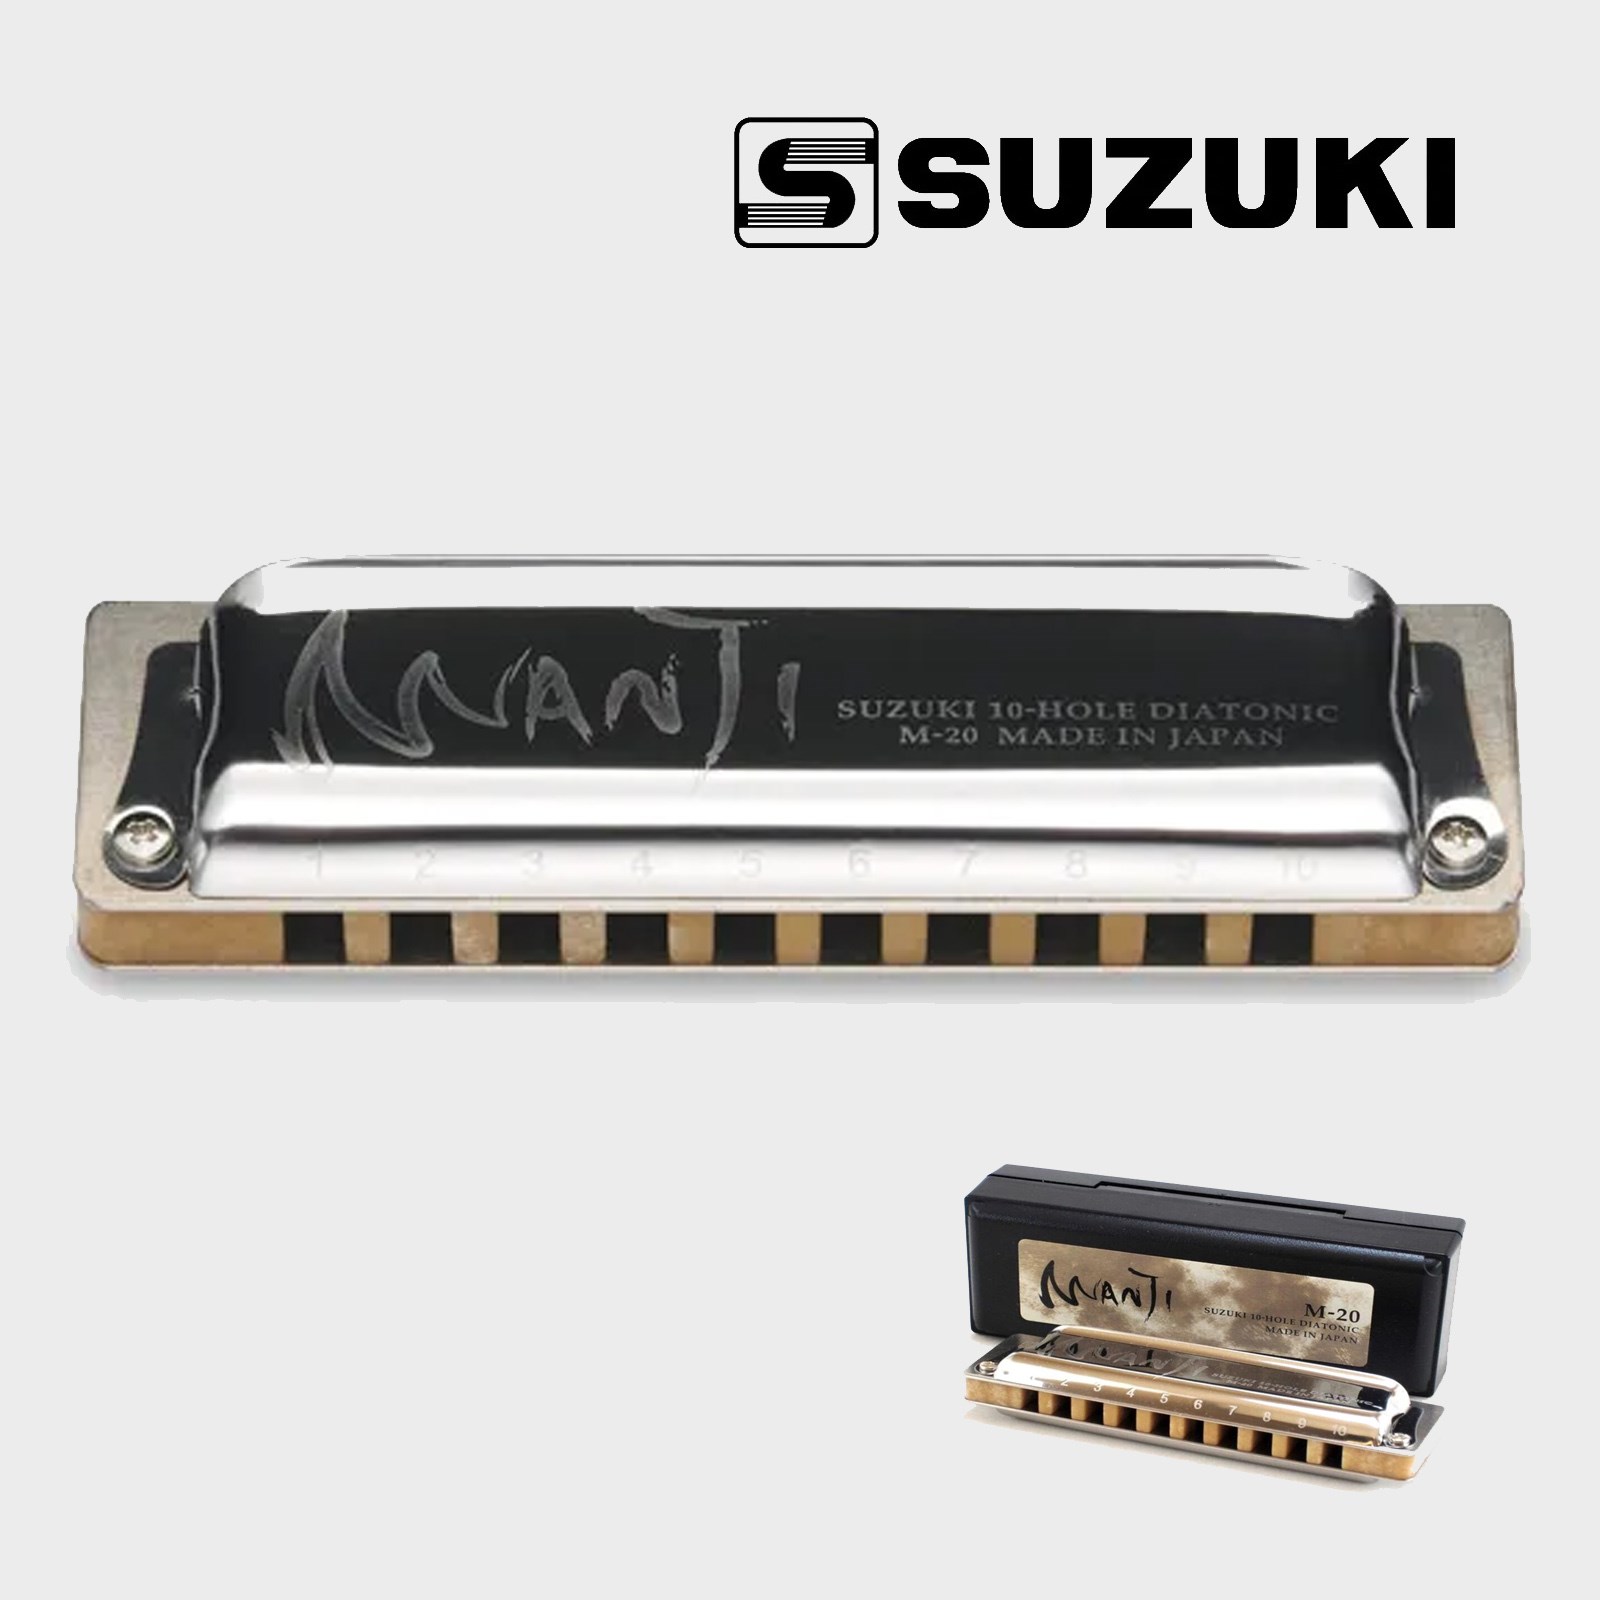 Suzuki Manji key of A